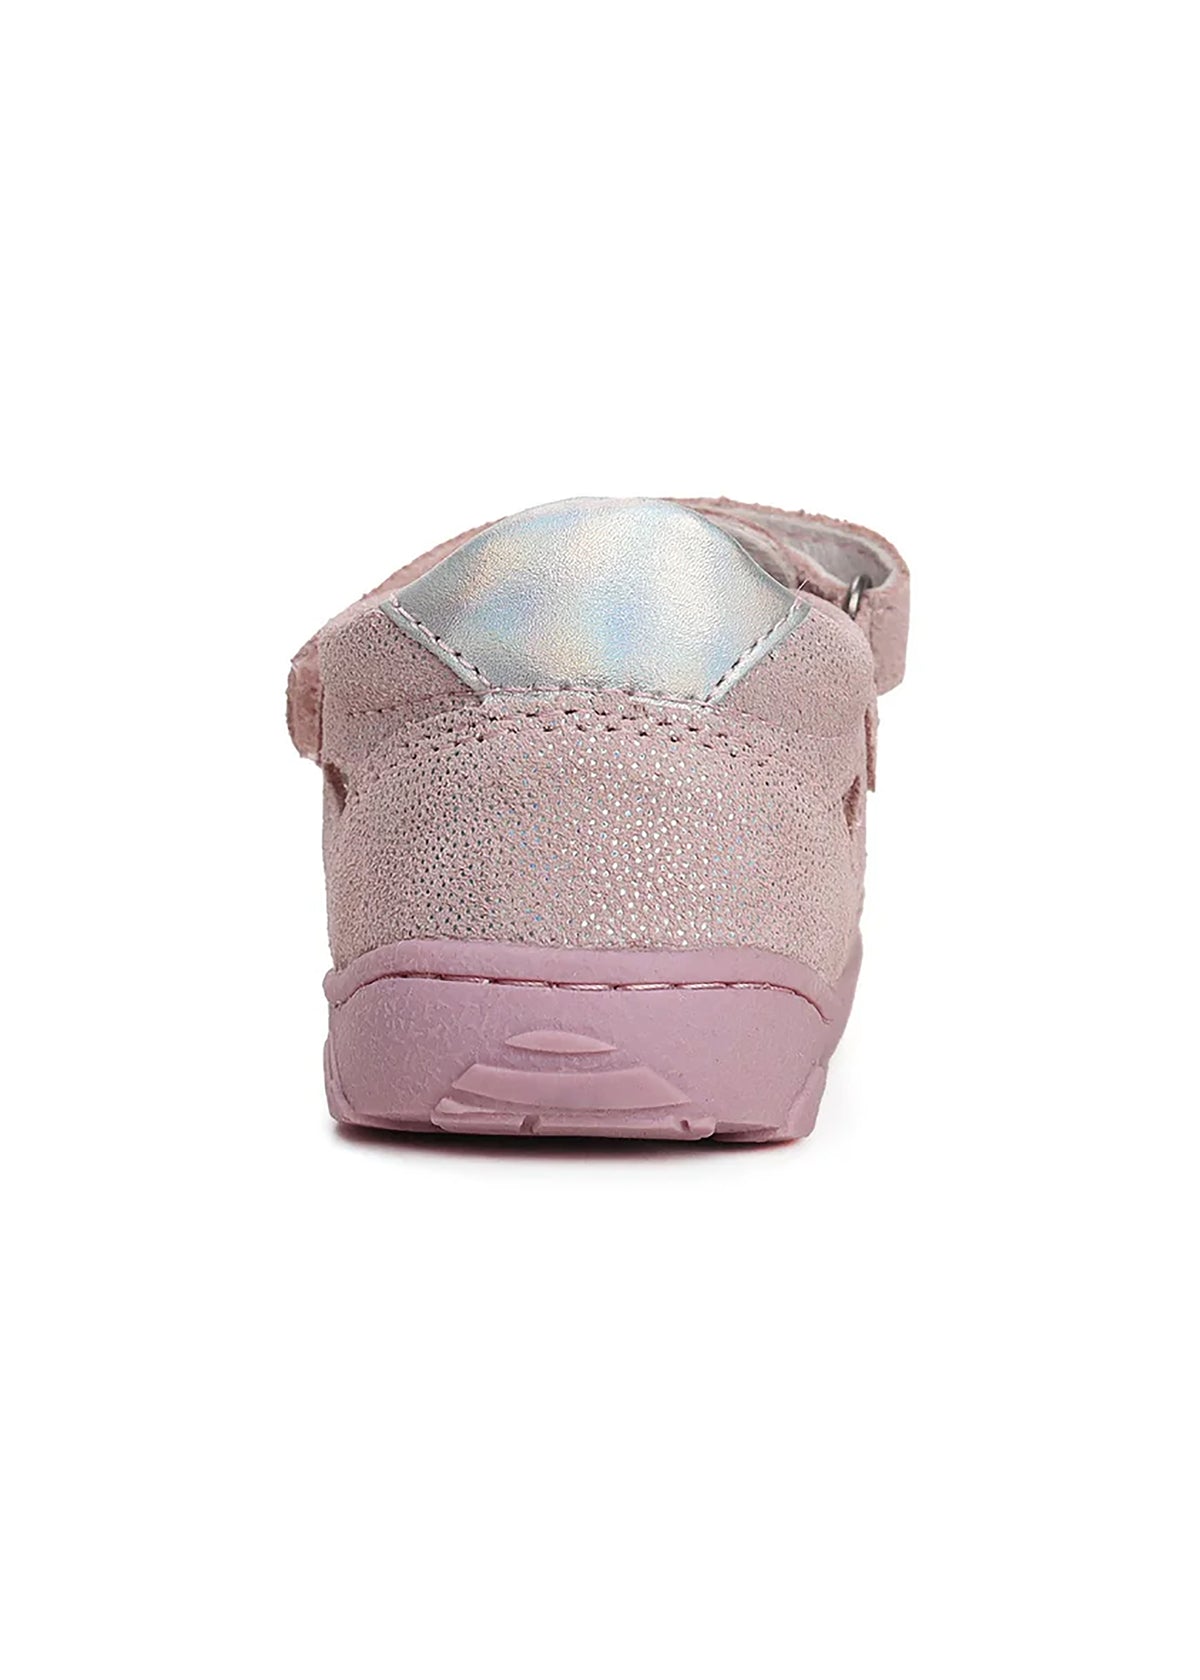 Kids' Barefoot Sandals - Pink Sparkling Leather